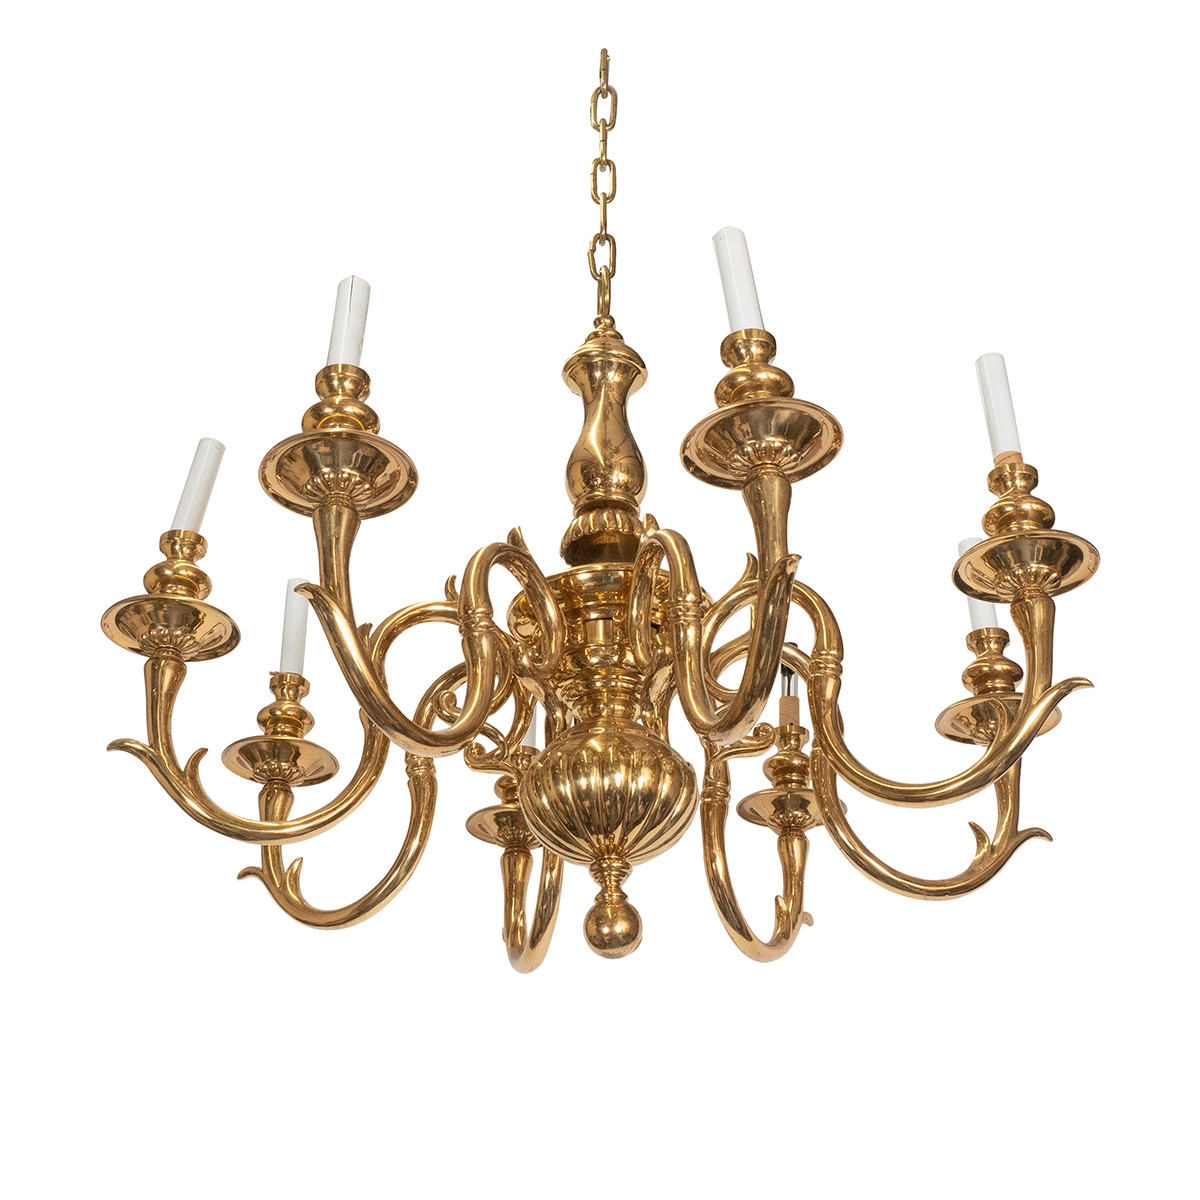 Tendril motif cast brass chandelier